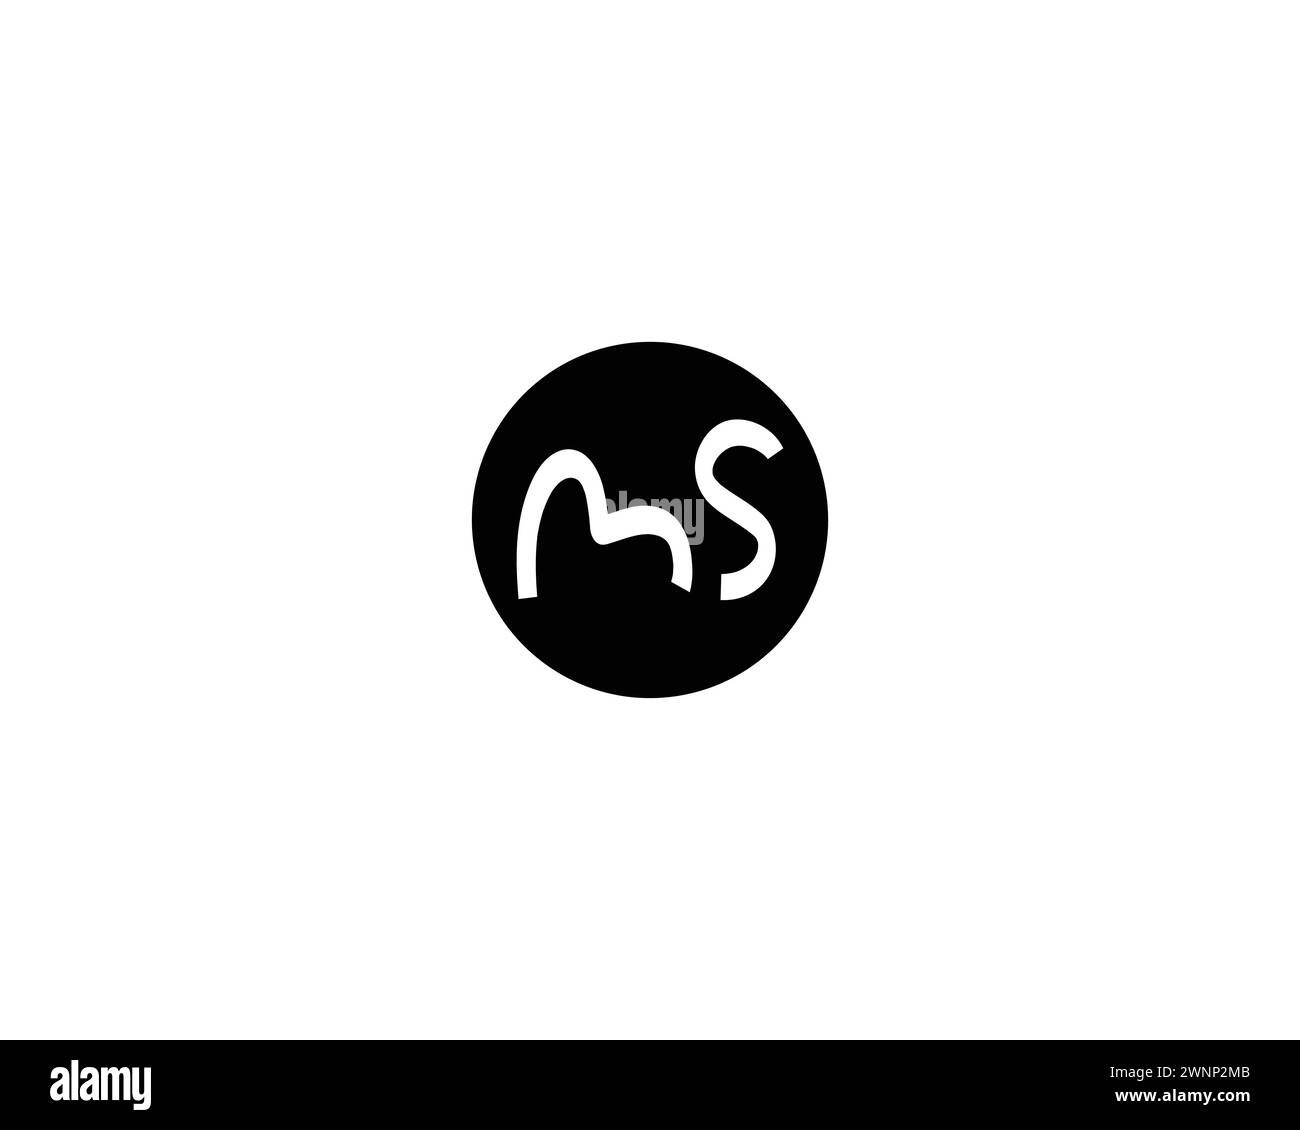 creative letter MS logo design vector template Stock Vector